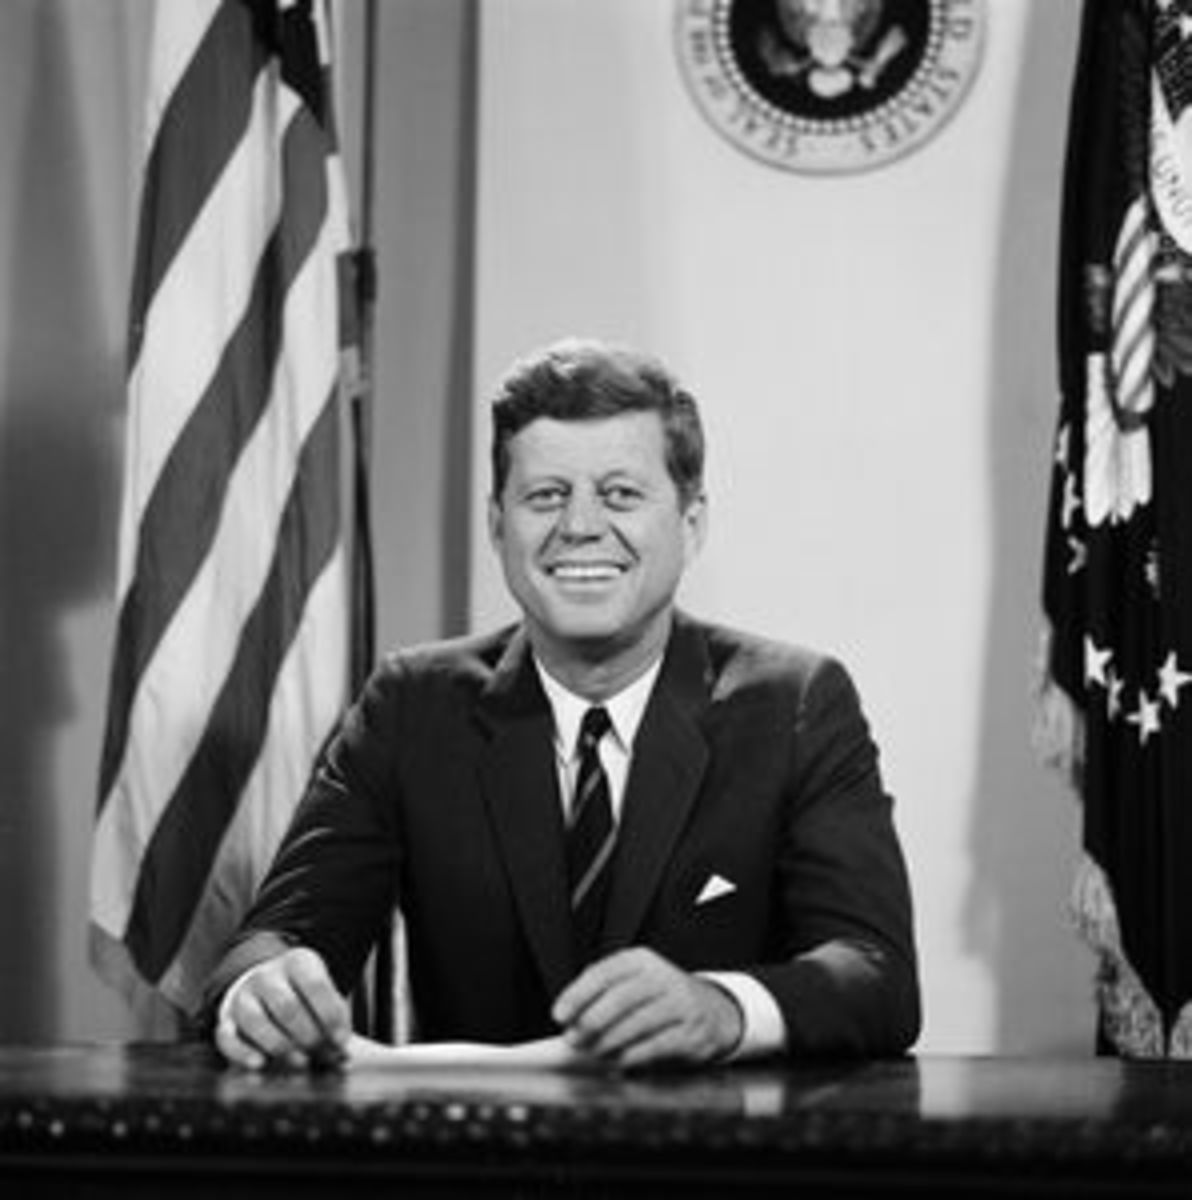 President Kennedy Murdered, Sixty Years Ago